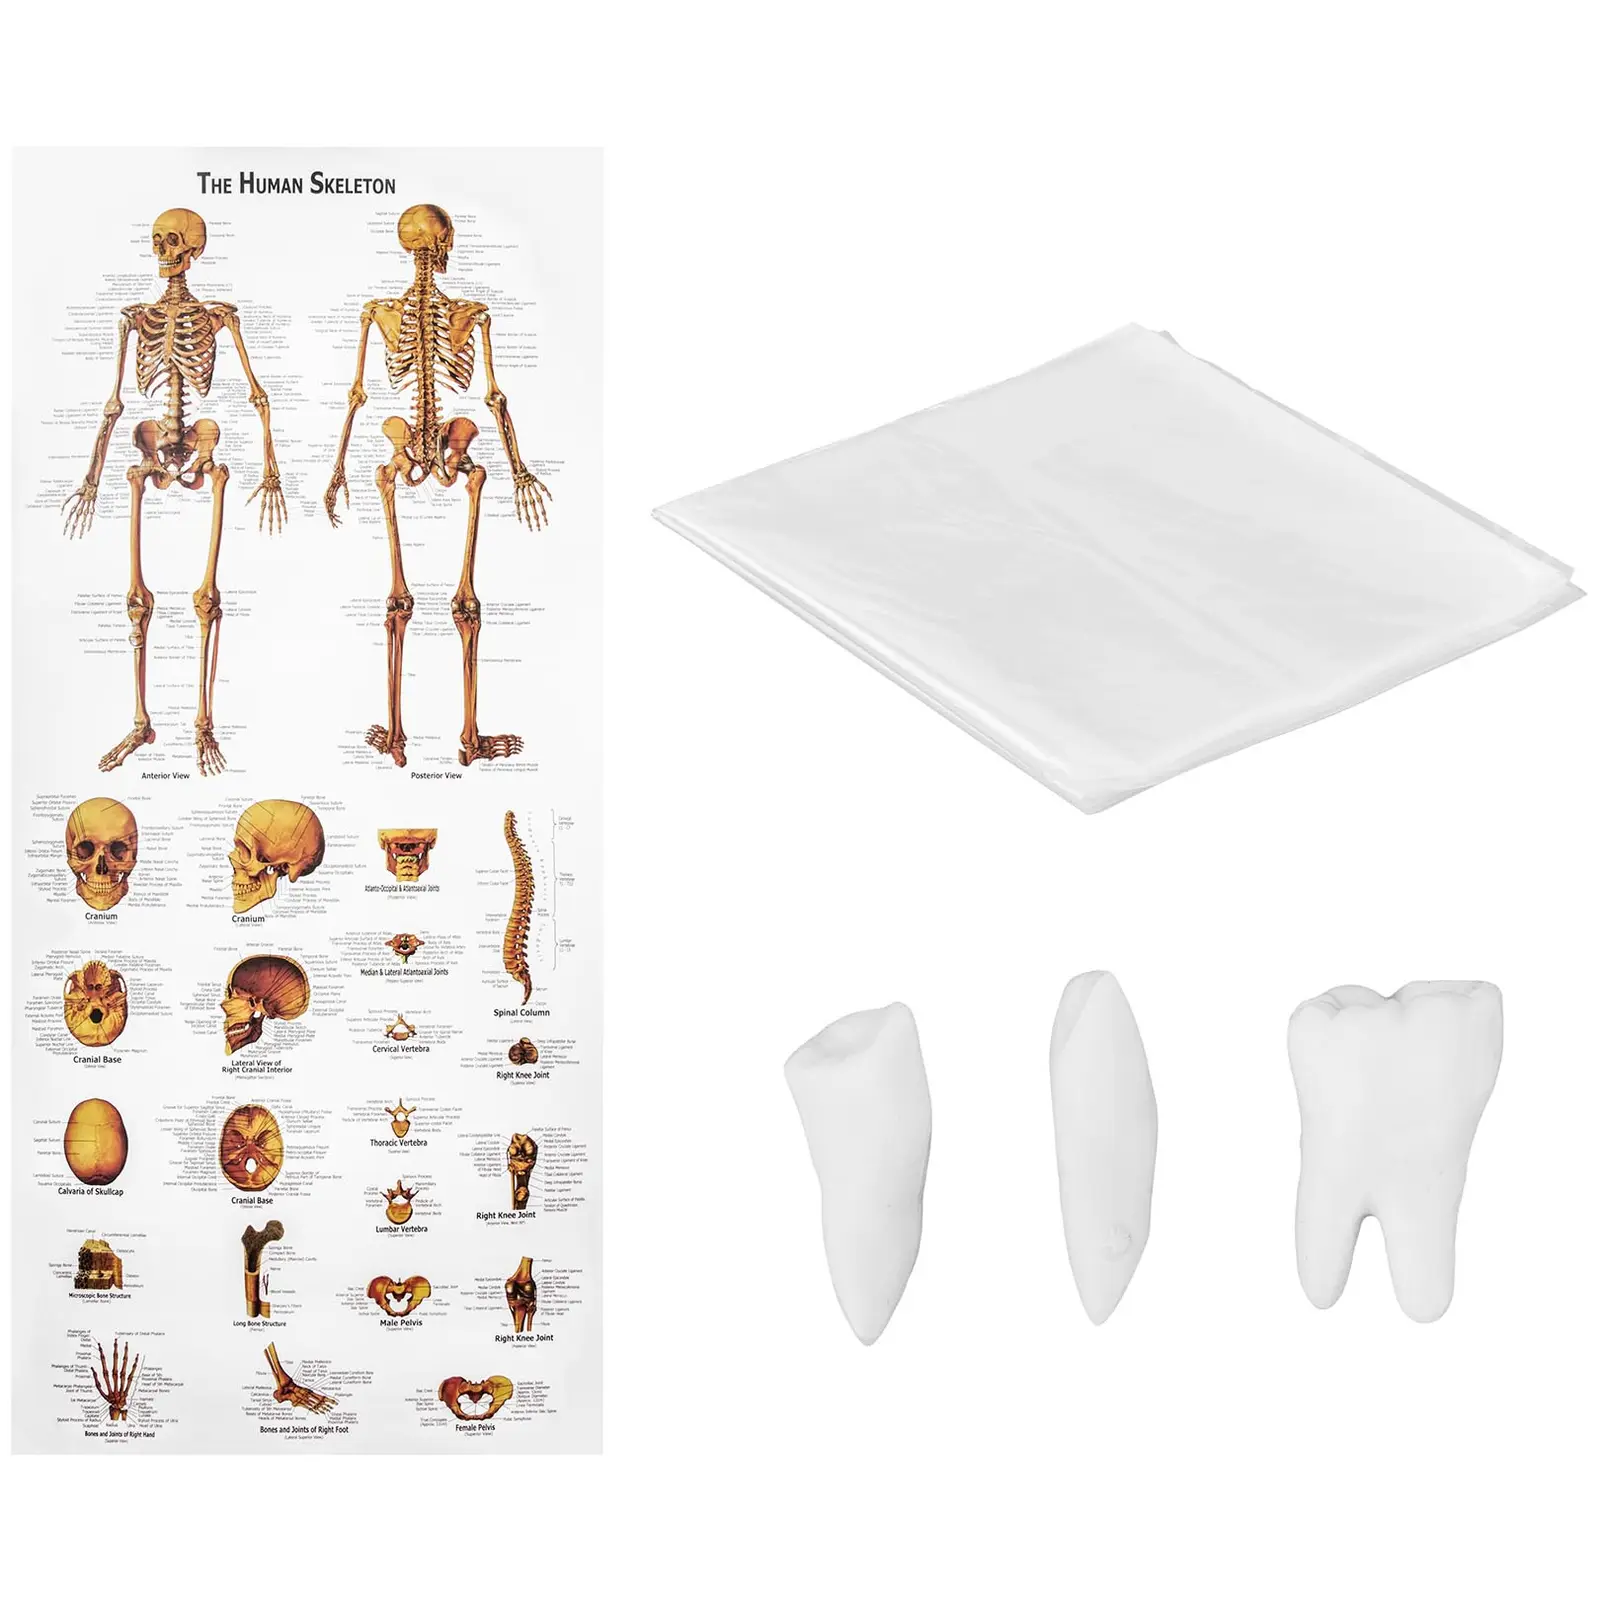 Skeleton Model - Life-sized